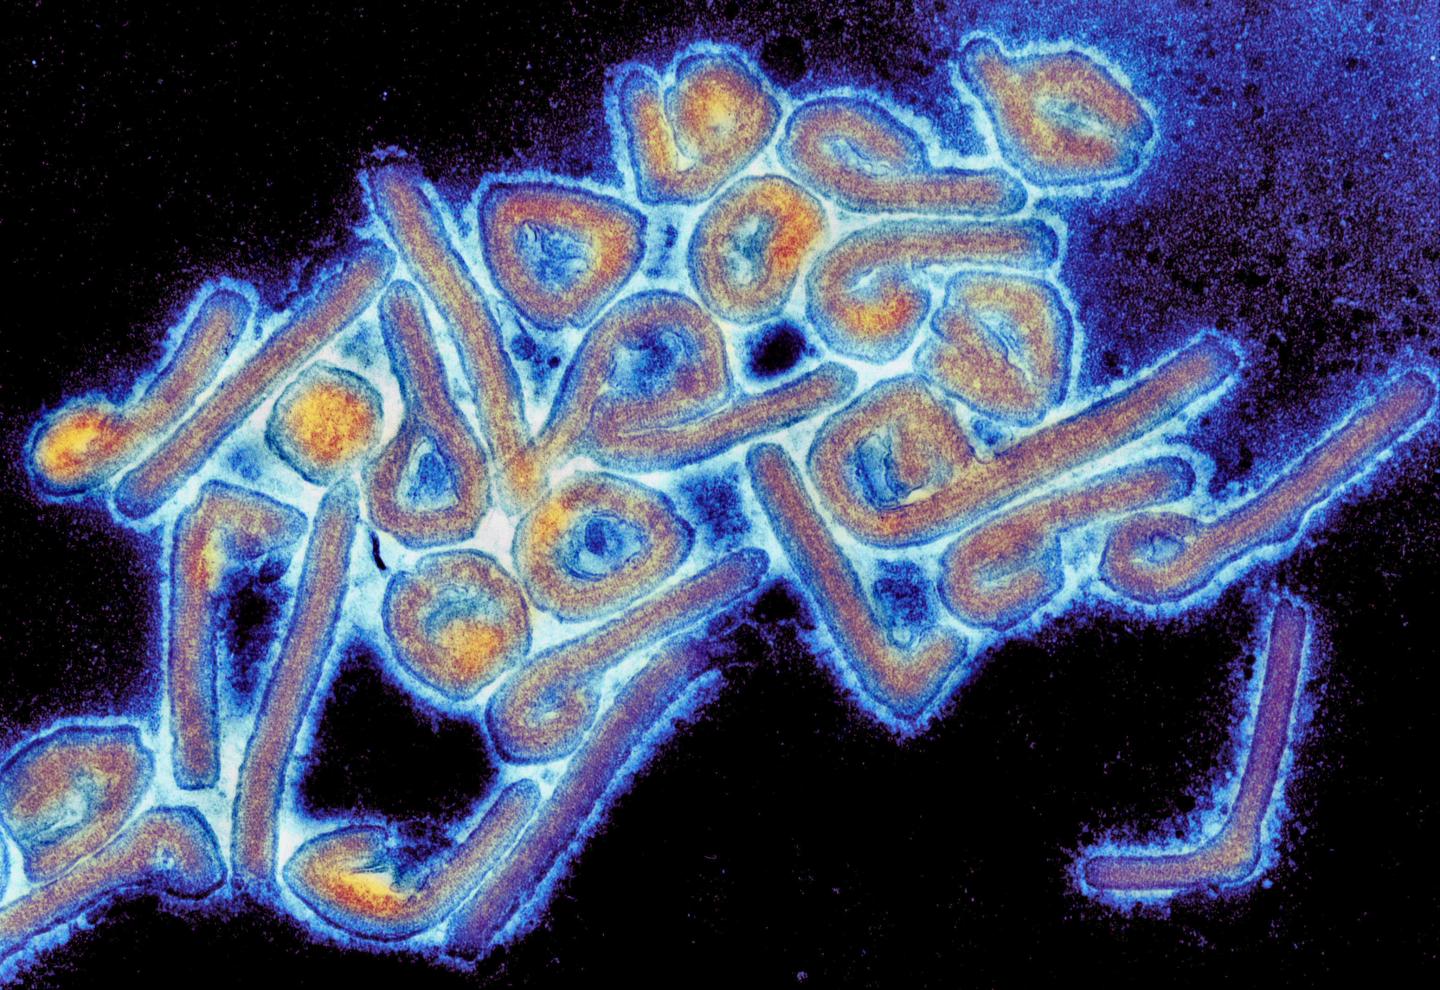 Micrograph of the Marburg Virus